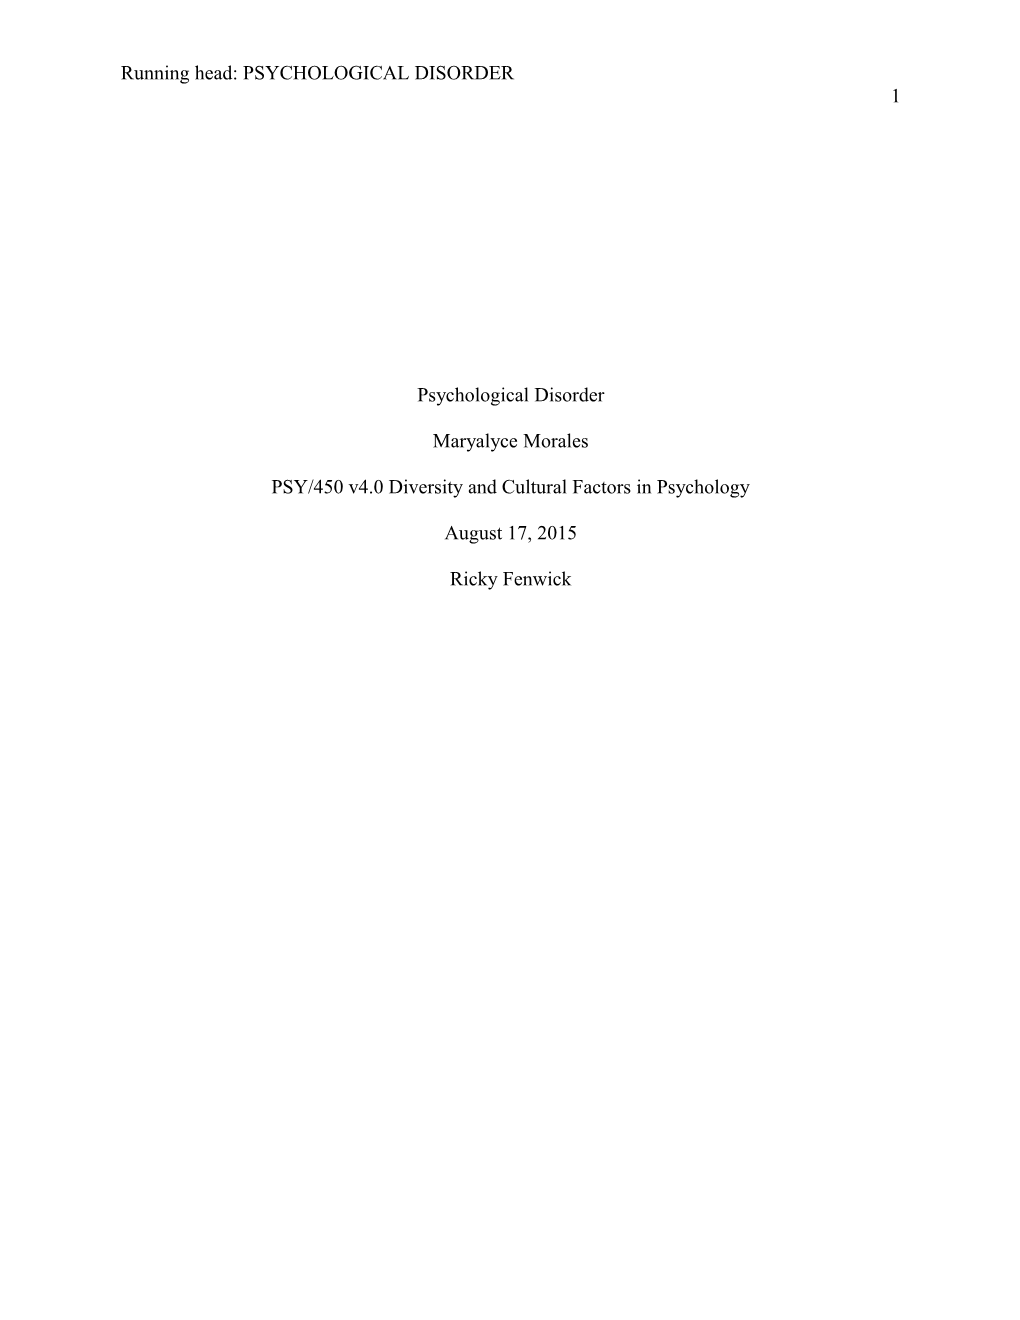 PSY/450 V4.0 Diversity and Cultural Factors in Psychology